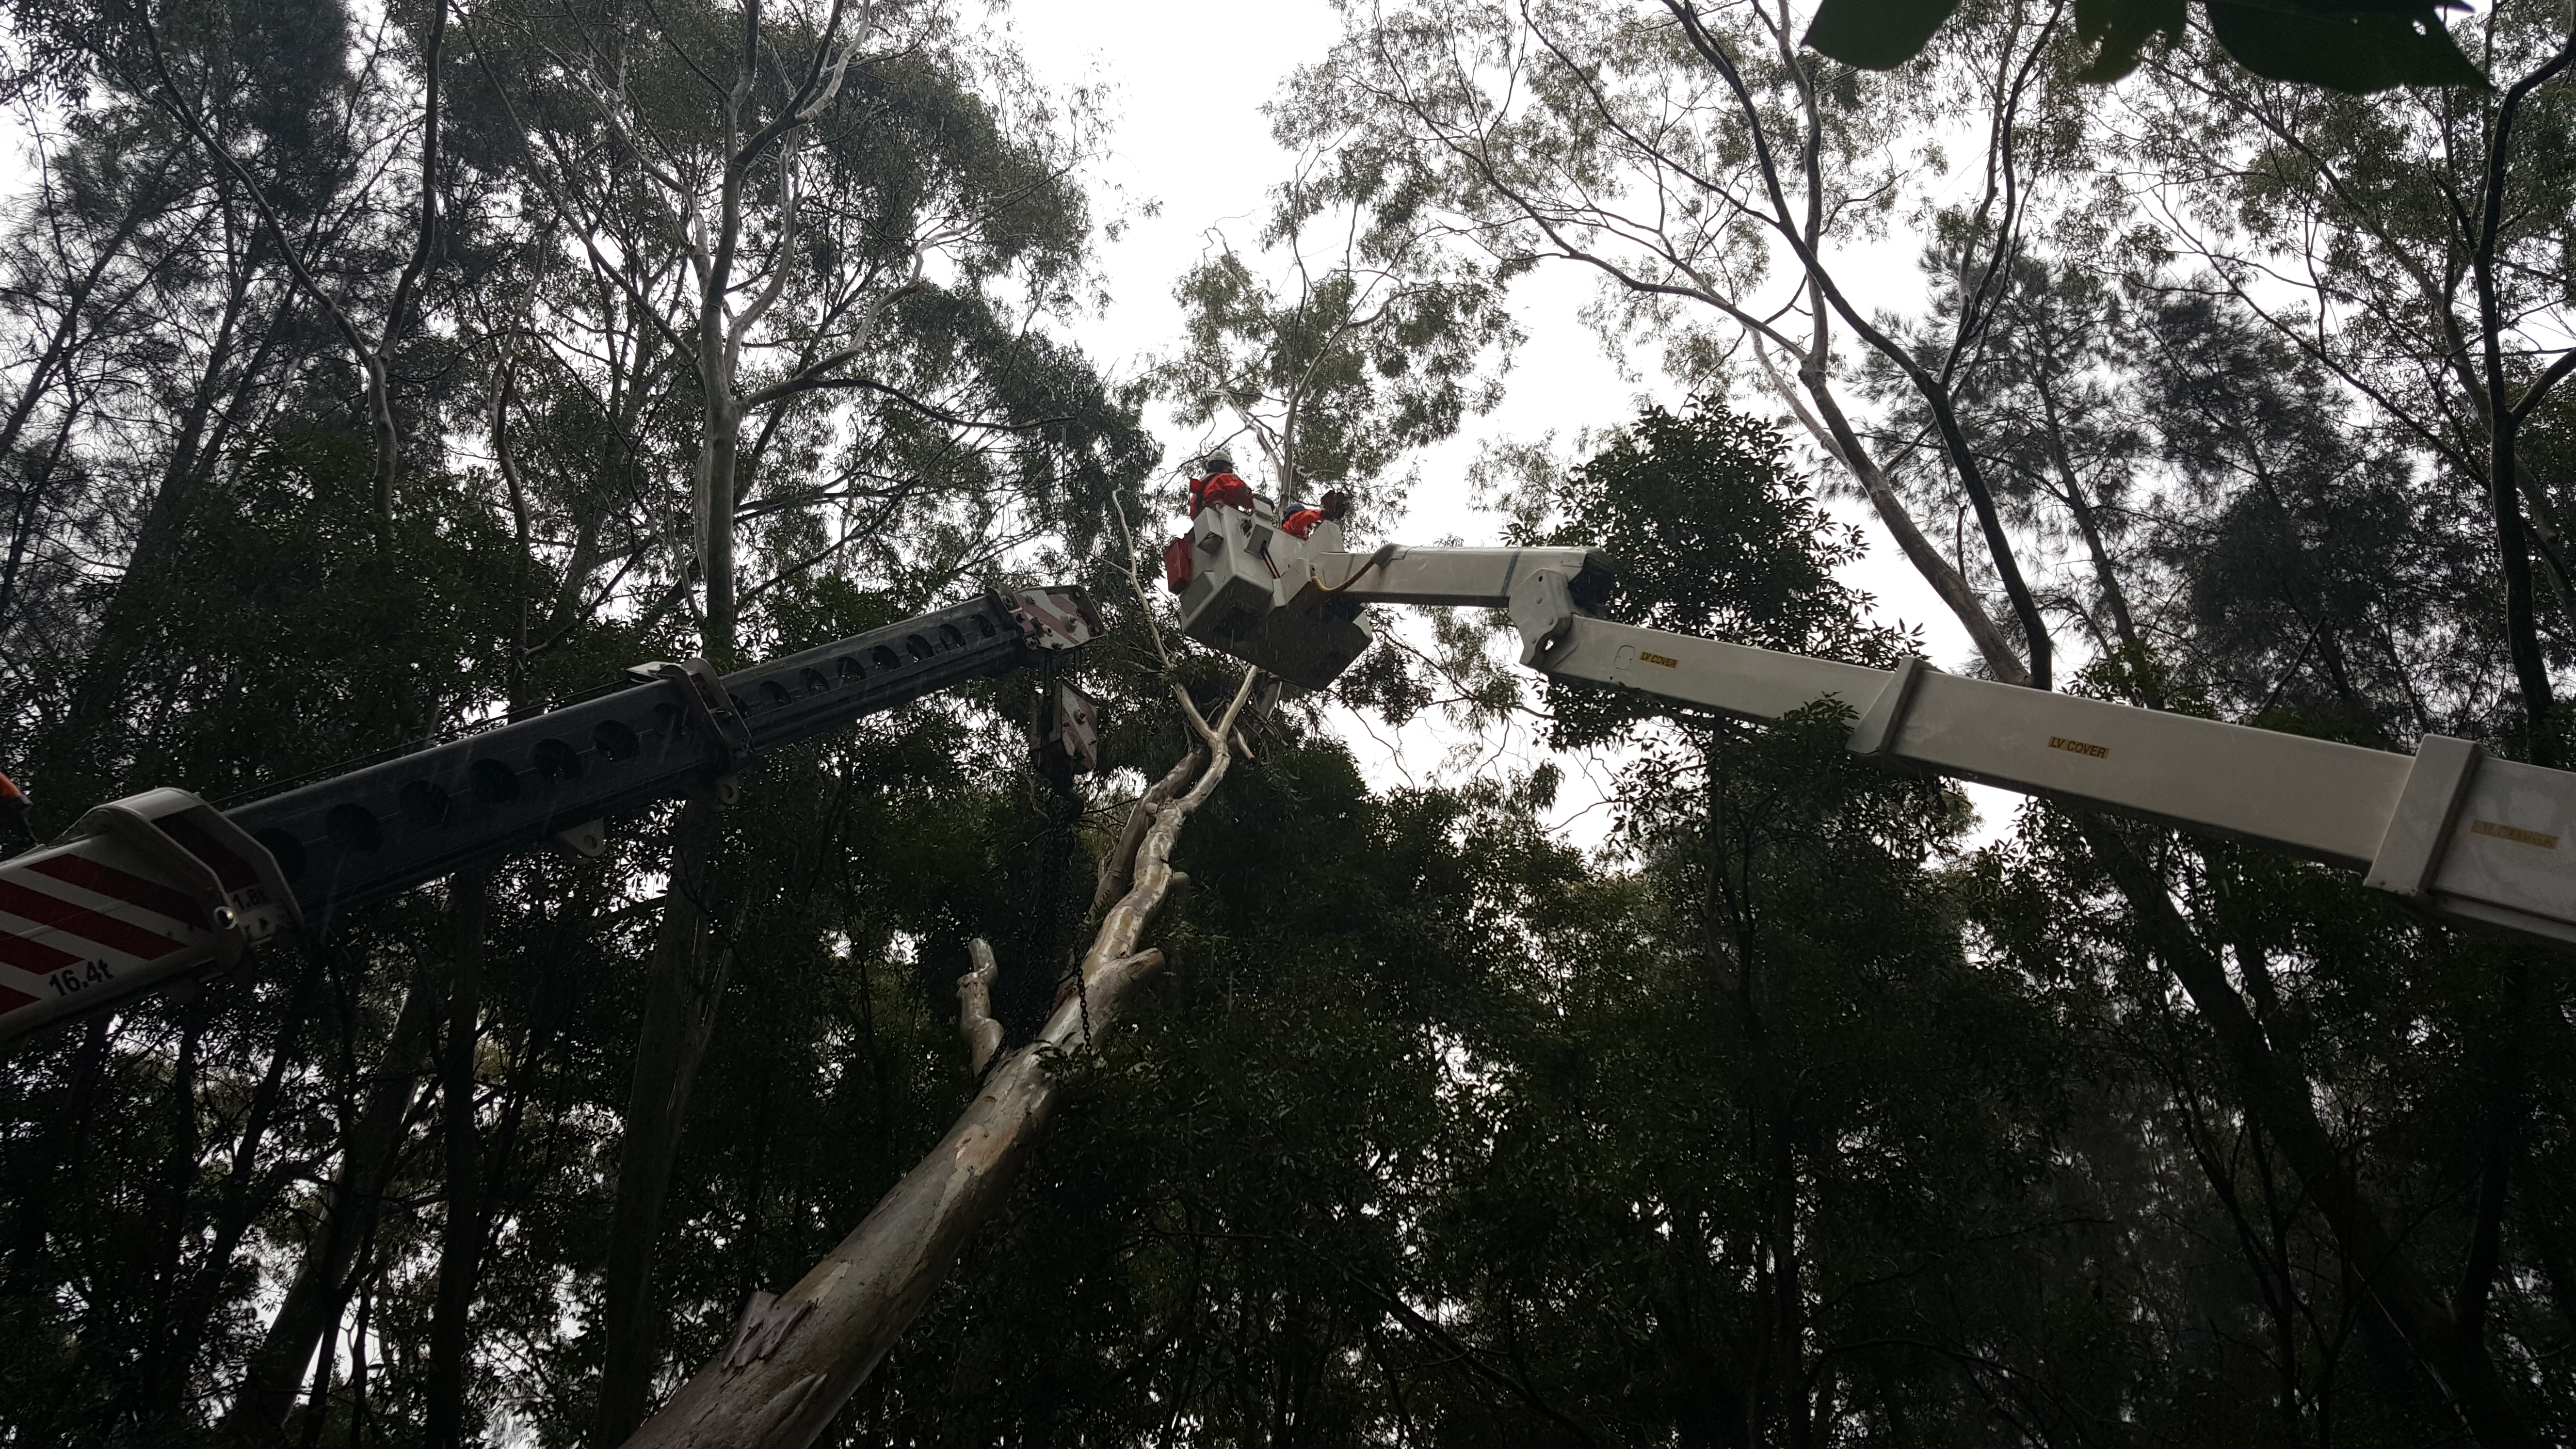 Crane removal of fallen tree